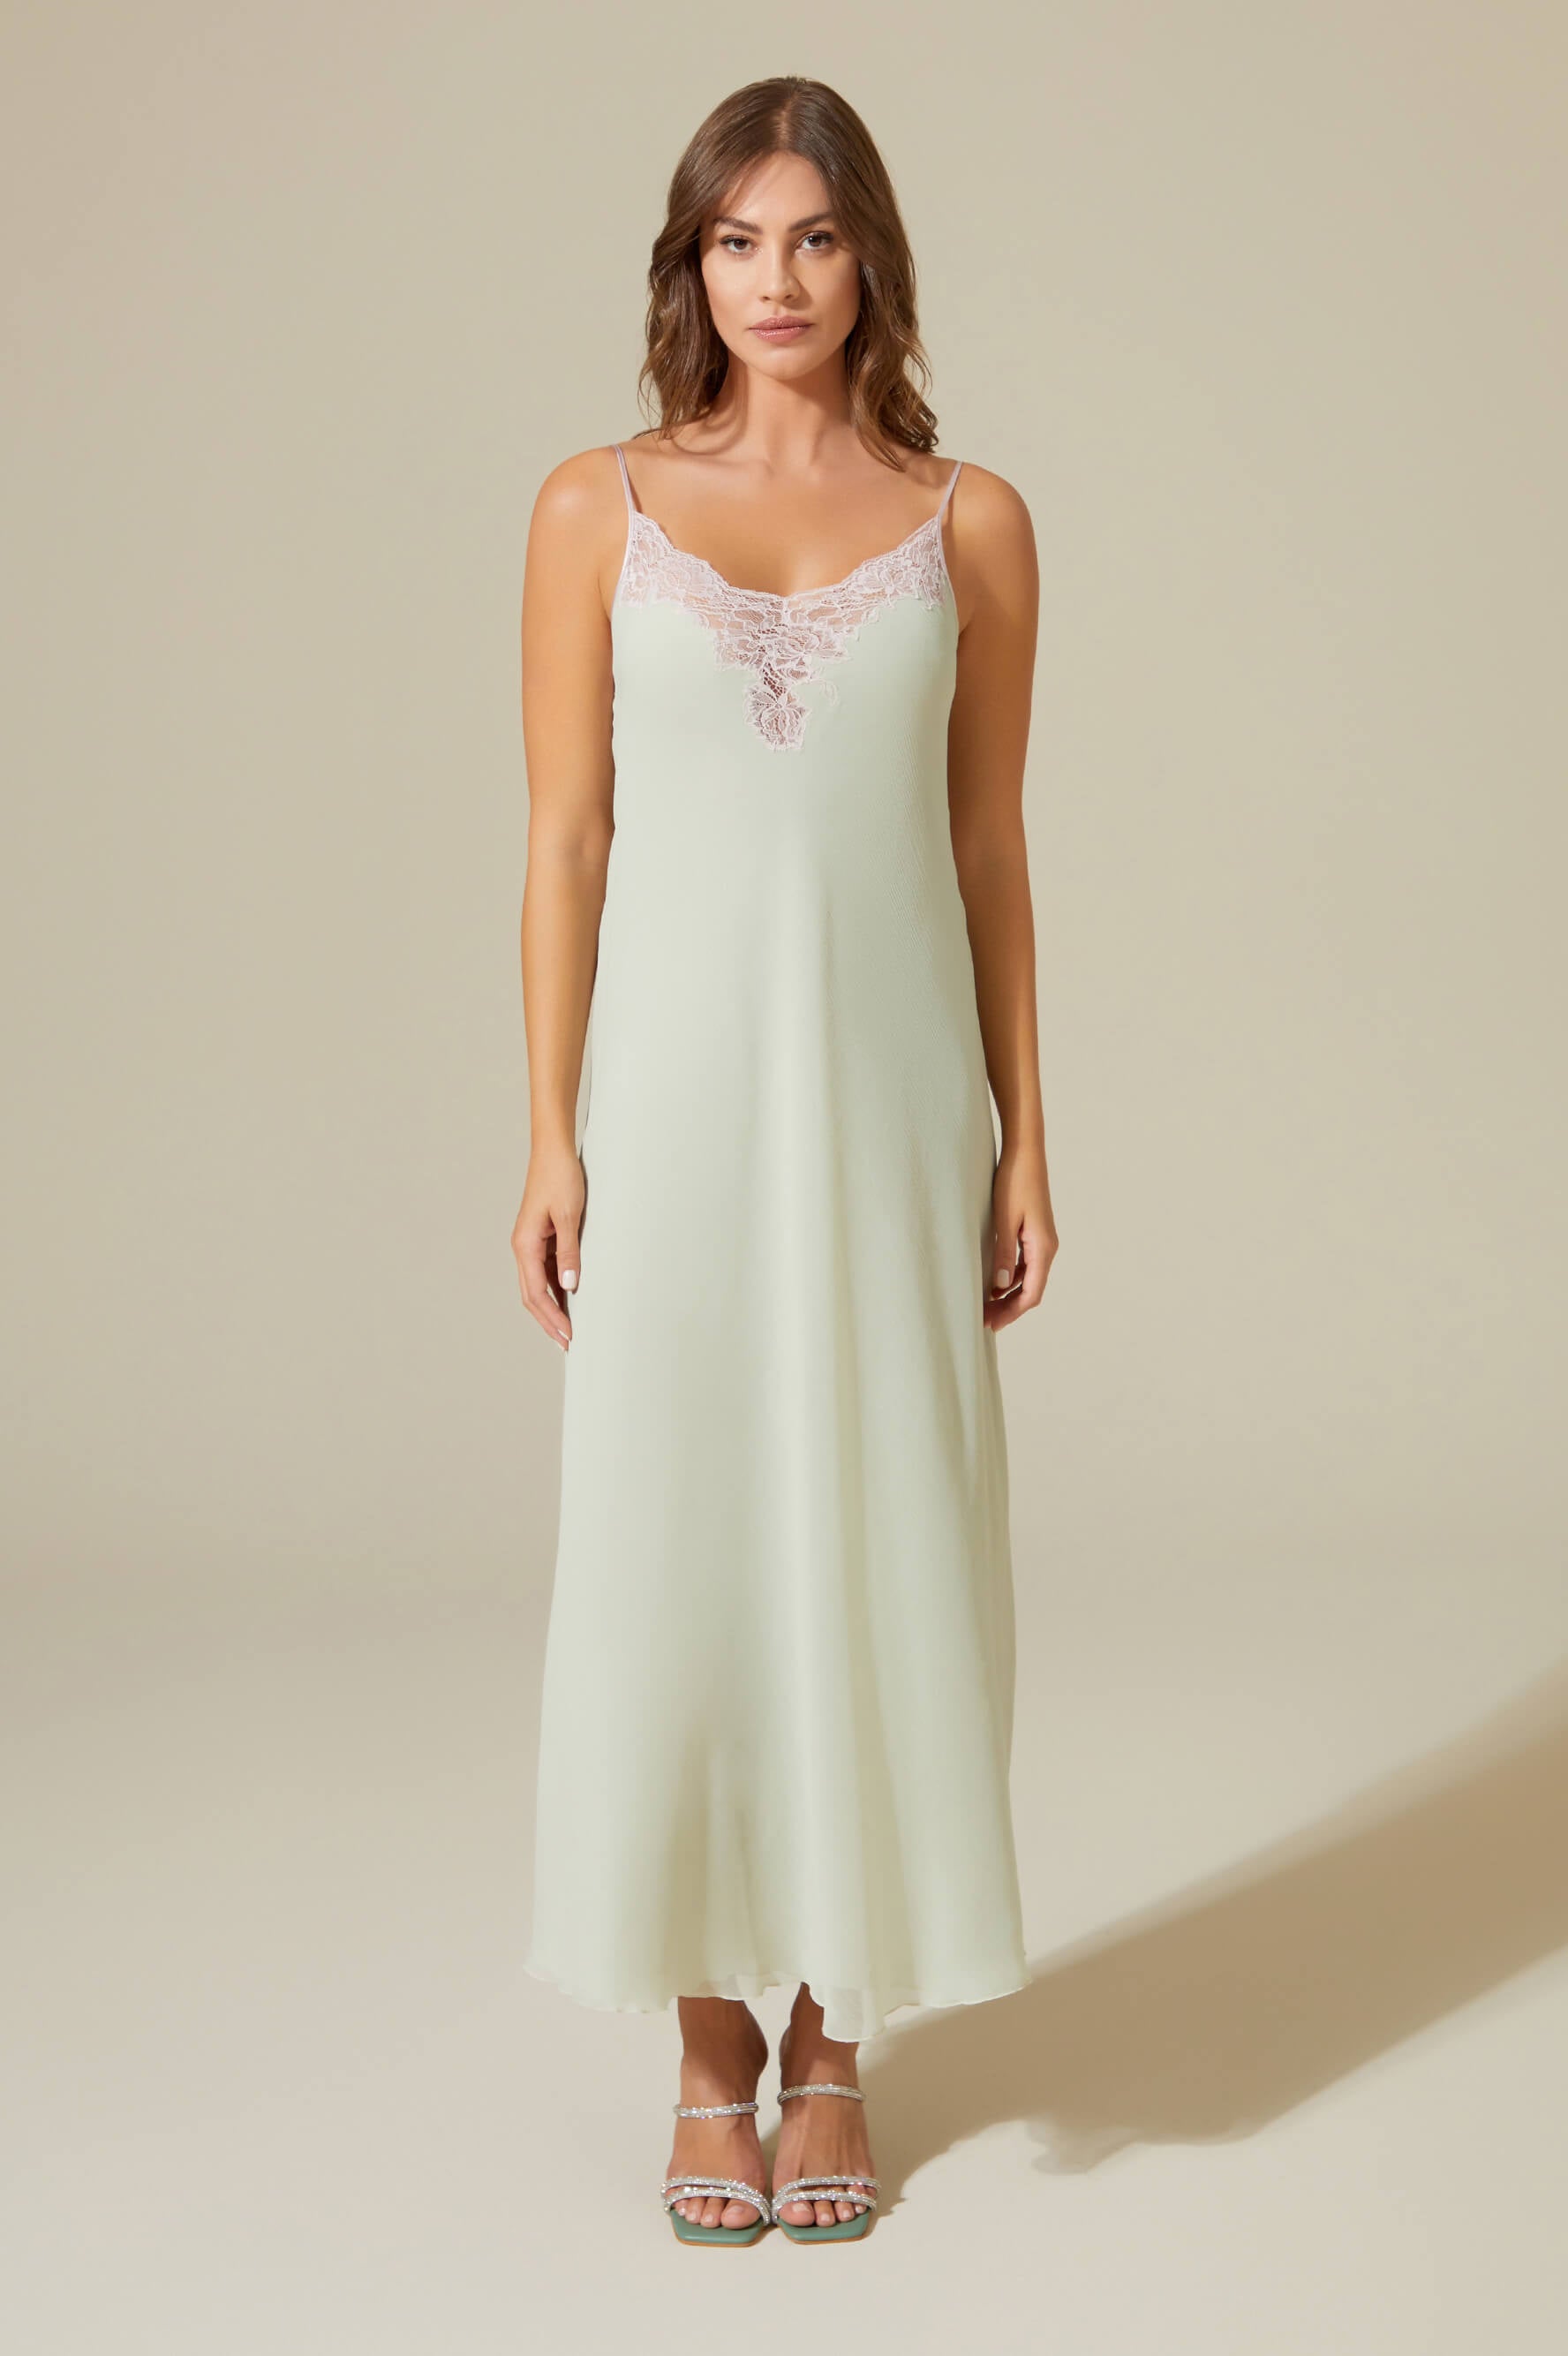 Darlene Long Double Layered Silk Chiffon Nightgown - Pink Lace on Sage Green